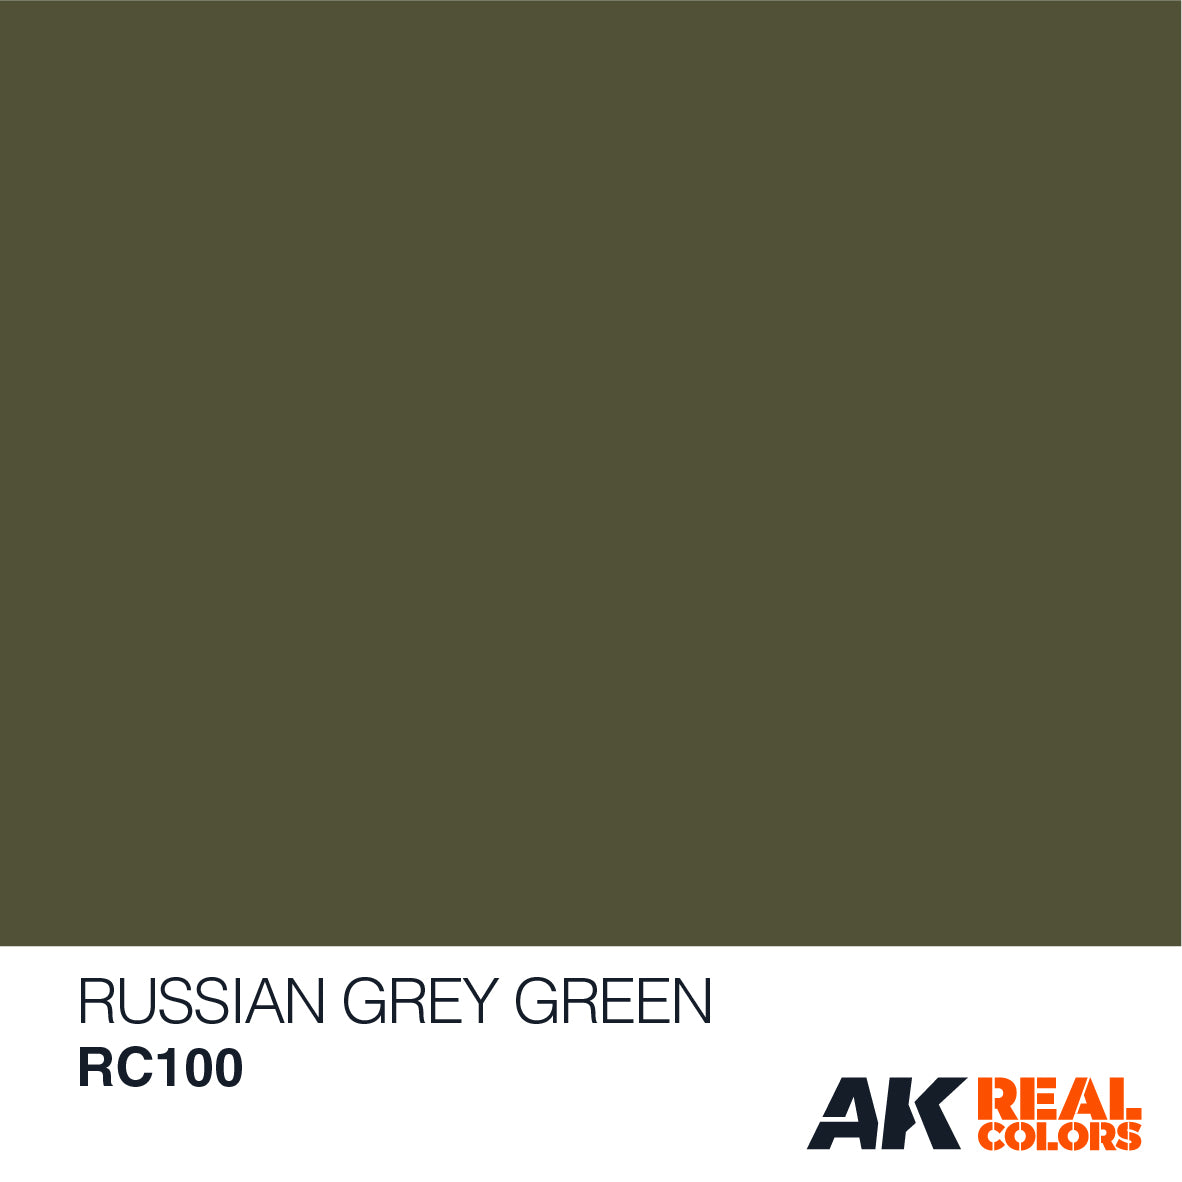 Russian Grey Green 10ml - Loaded Dice Barry Vale of Glamorgan CF64 3HD